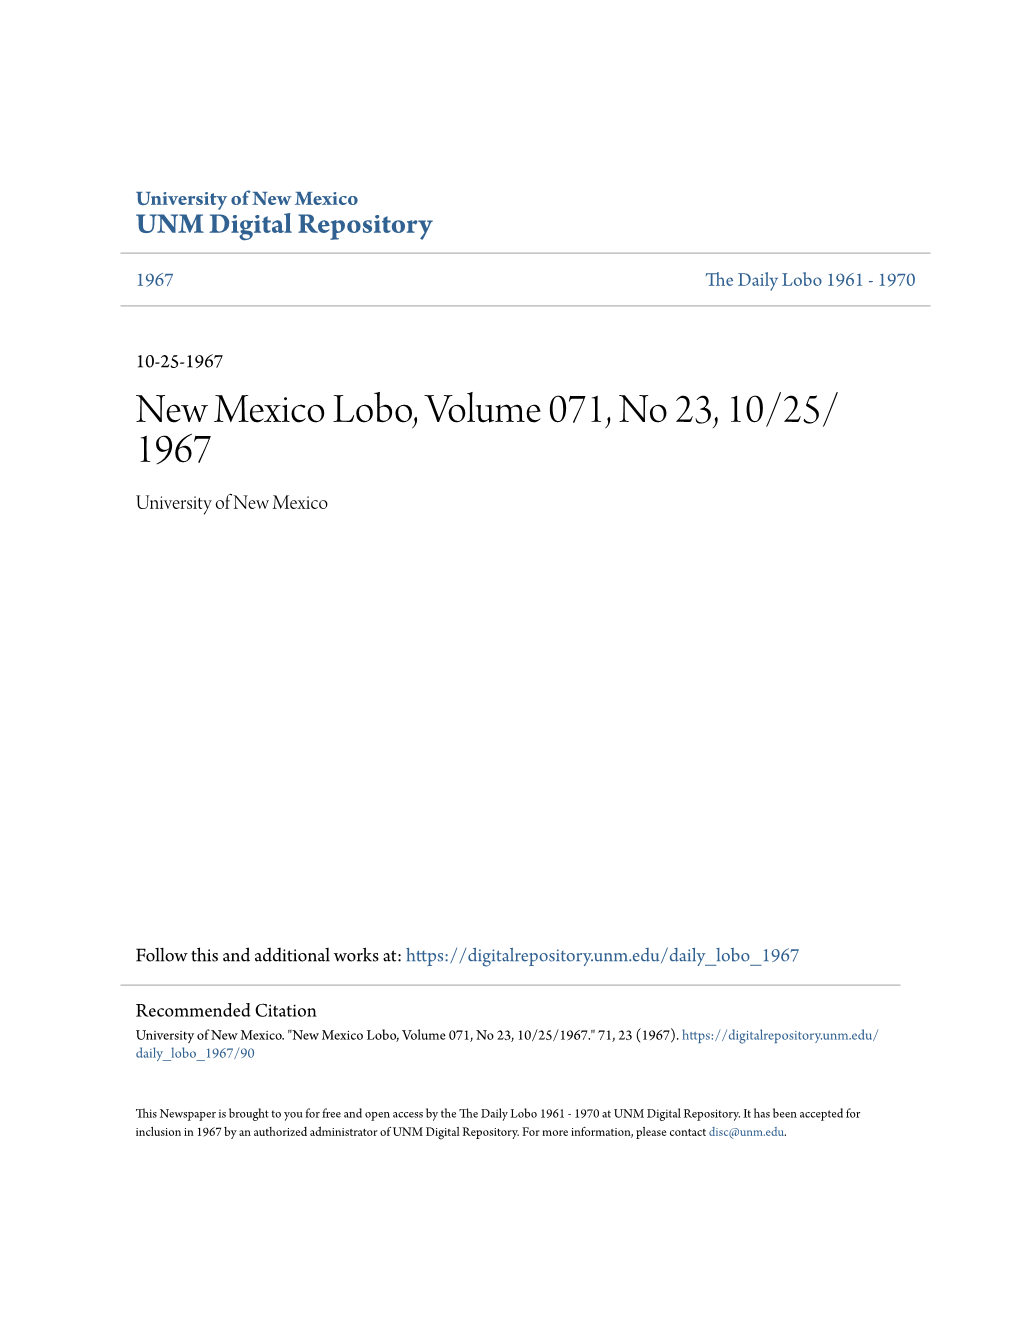 New Mexico Lobo, Volume 071, No 23, 10/25/1967." 71, 23 (1967)